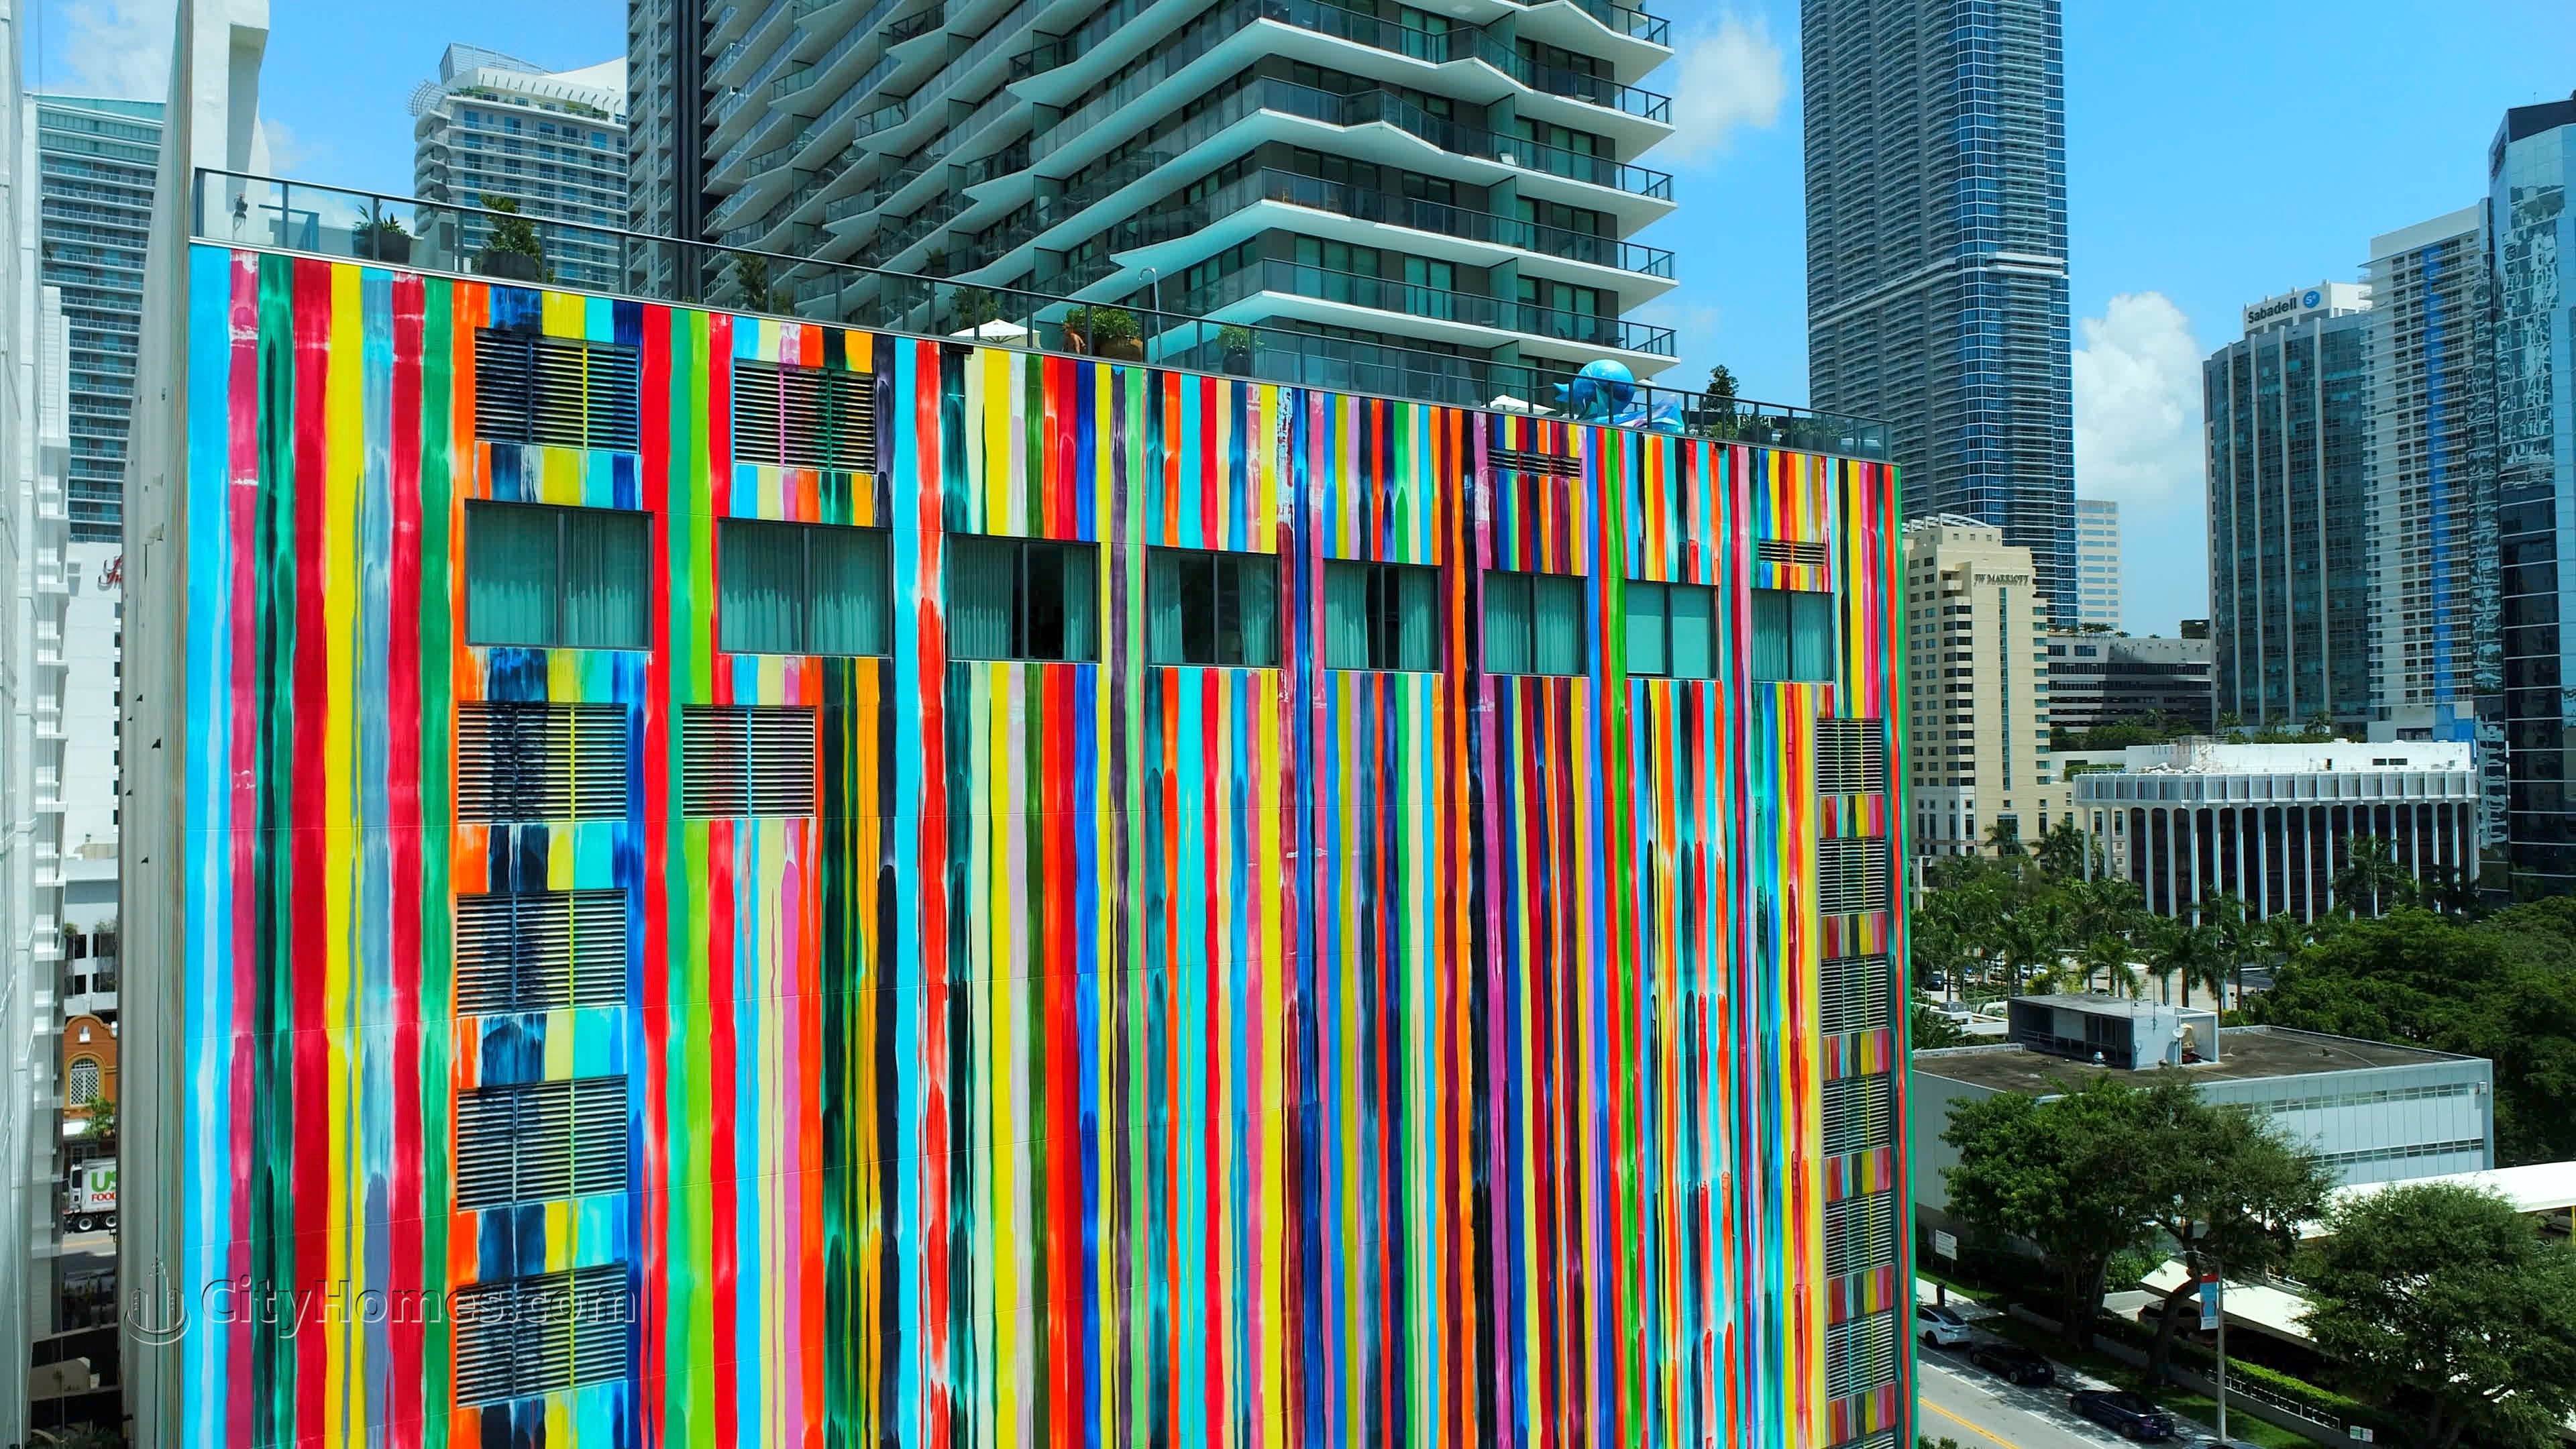 2. SLS Brickell building at 1300 S Miami Ave, Brickell, Miami, FL 33130